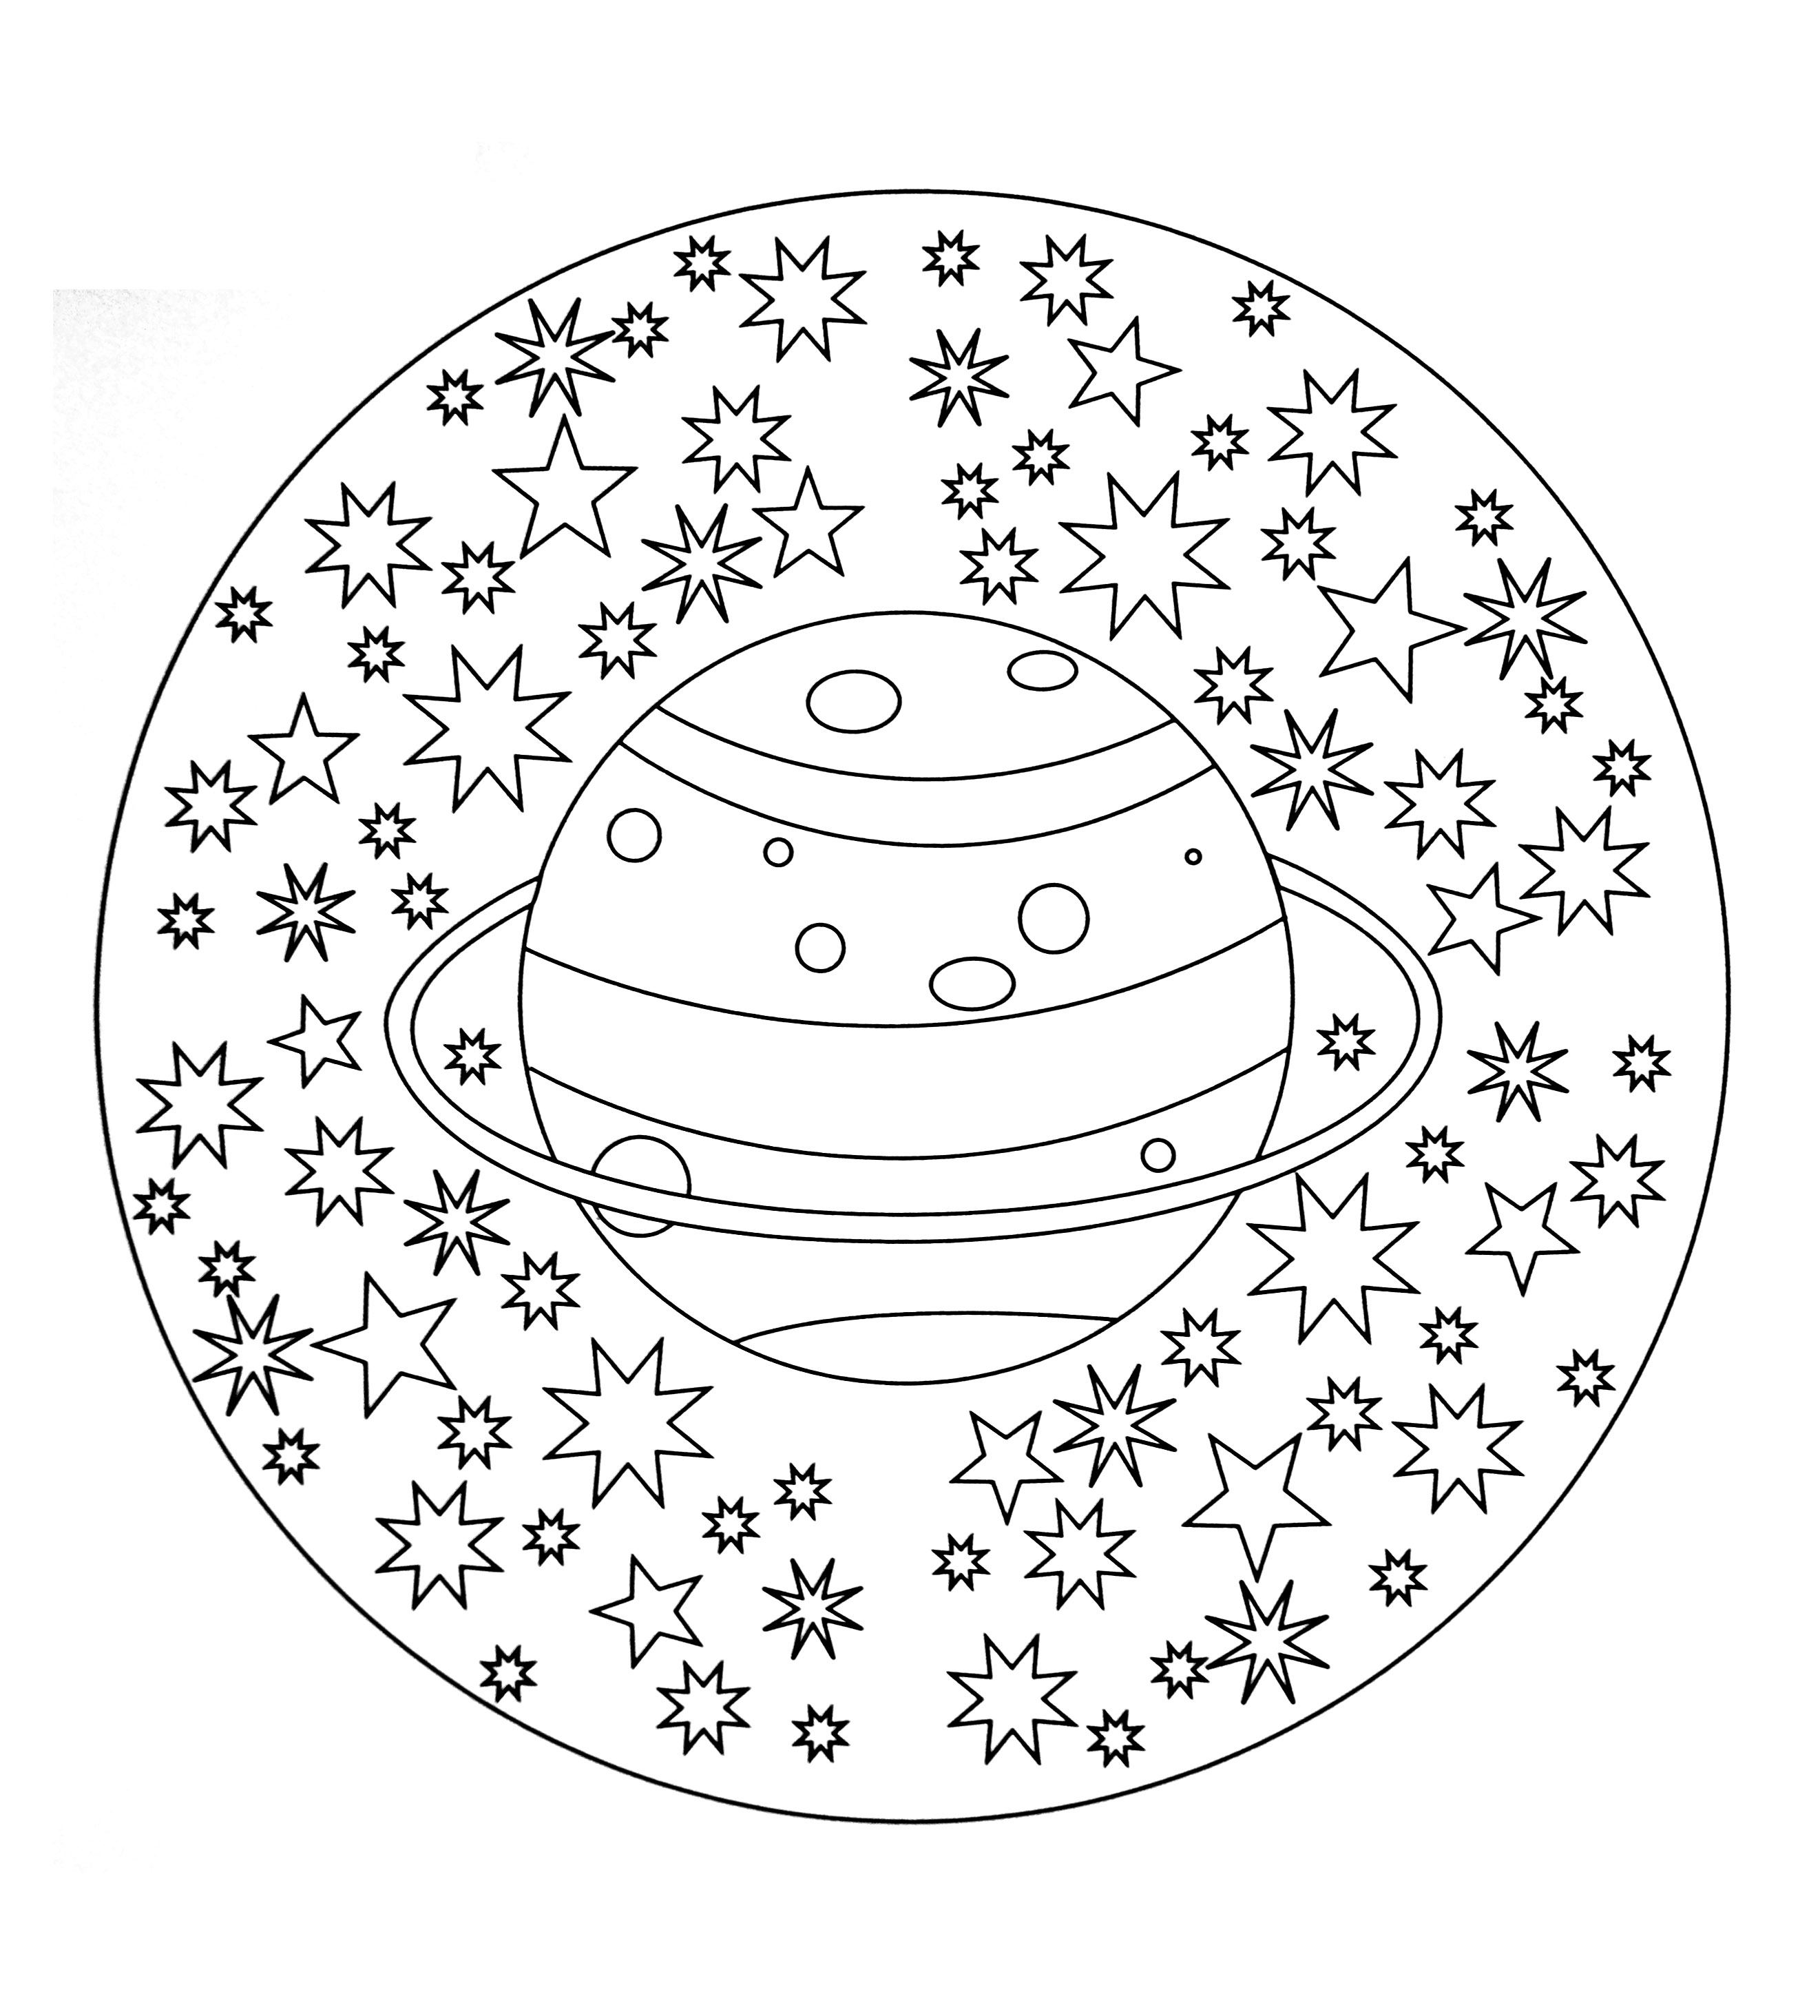 Coloring Pages Zen Solar System Mandala Easy Mandalas For Kids 100 Mandalas Zen